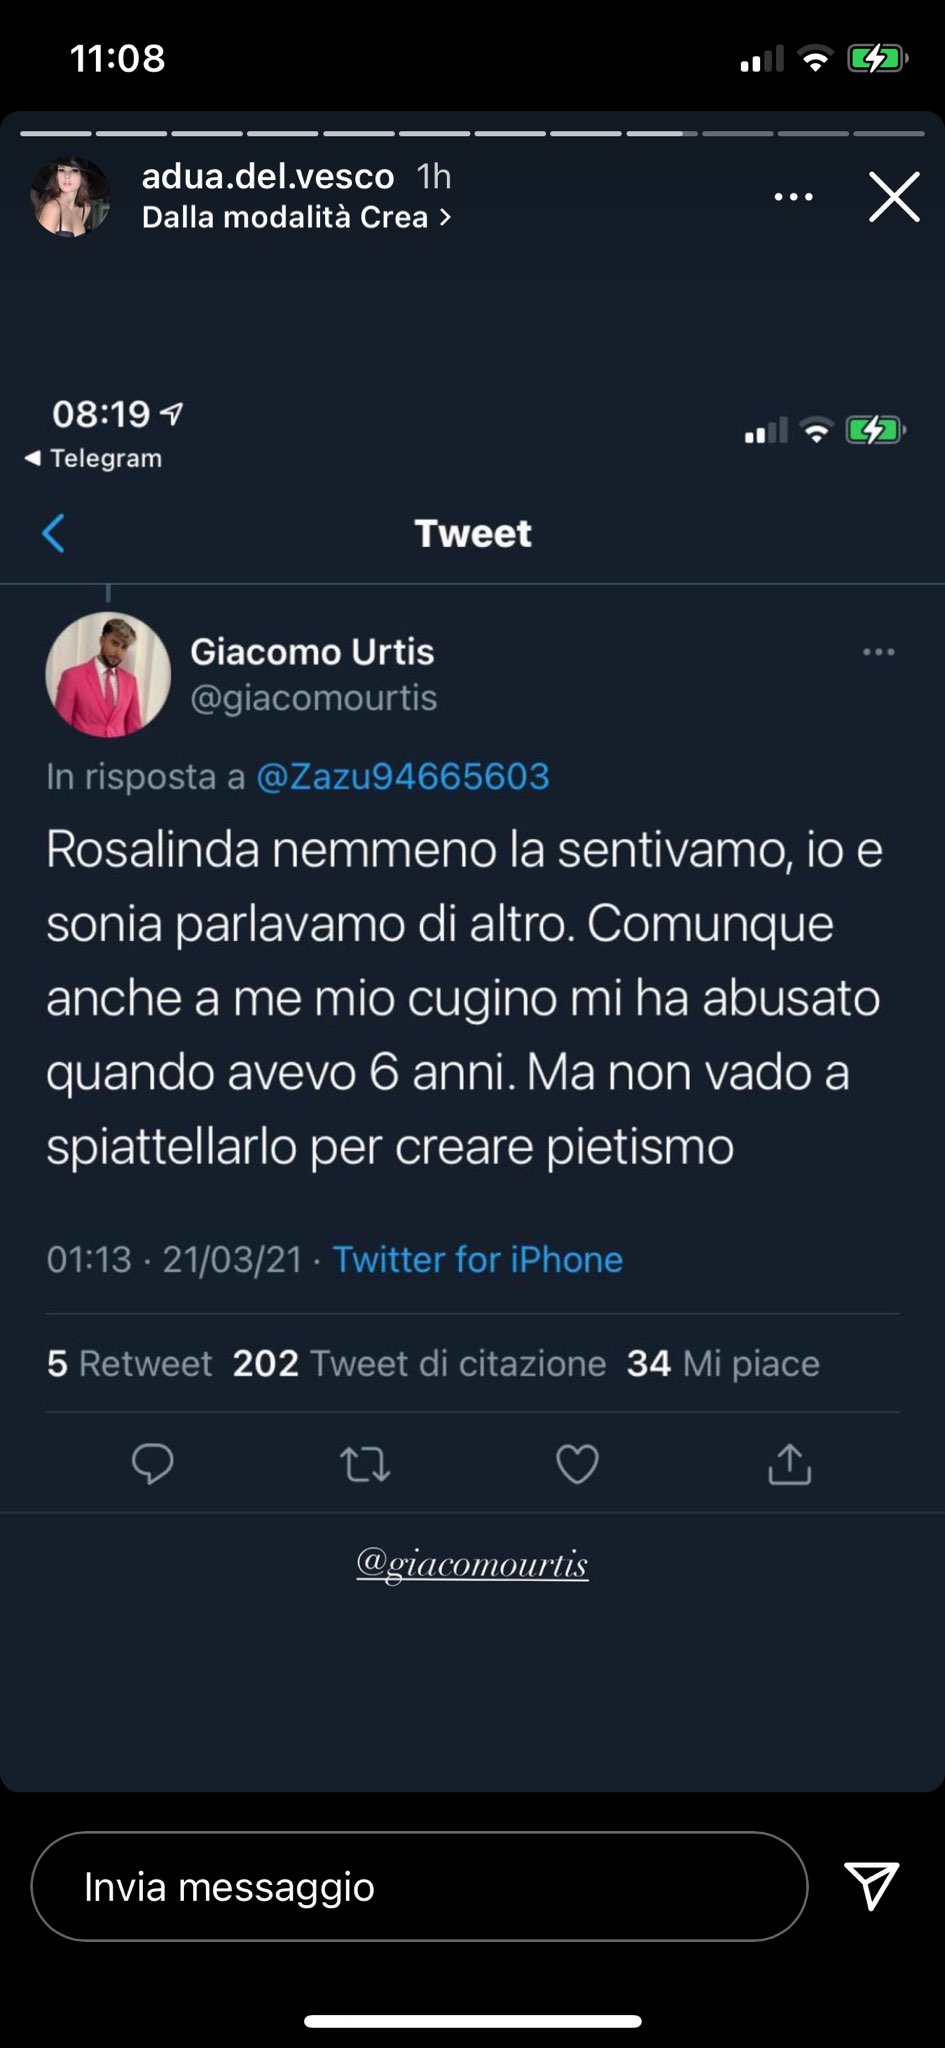 Giacomo Urtis tweet contro Rosalinda